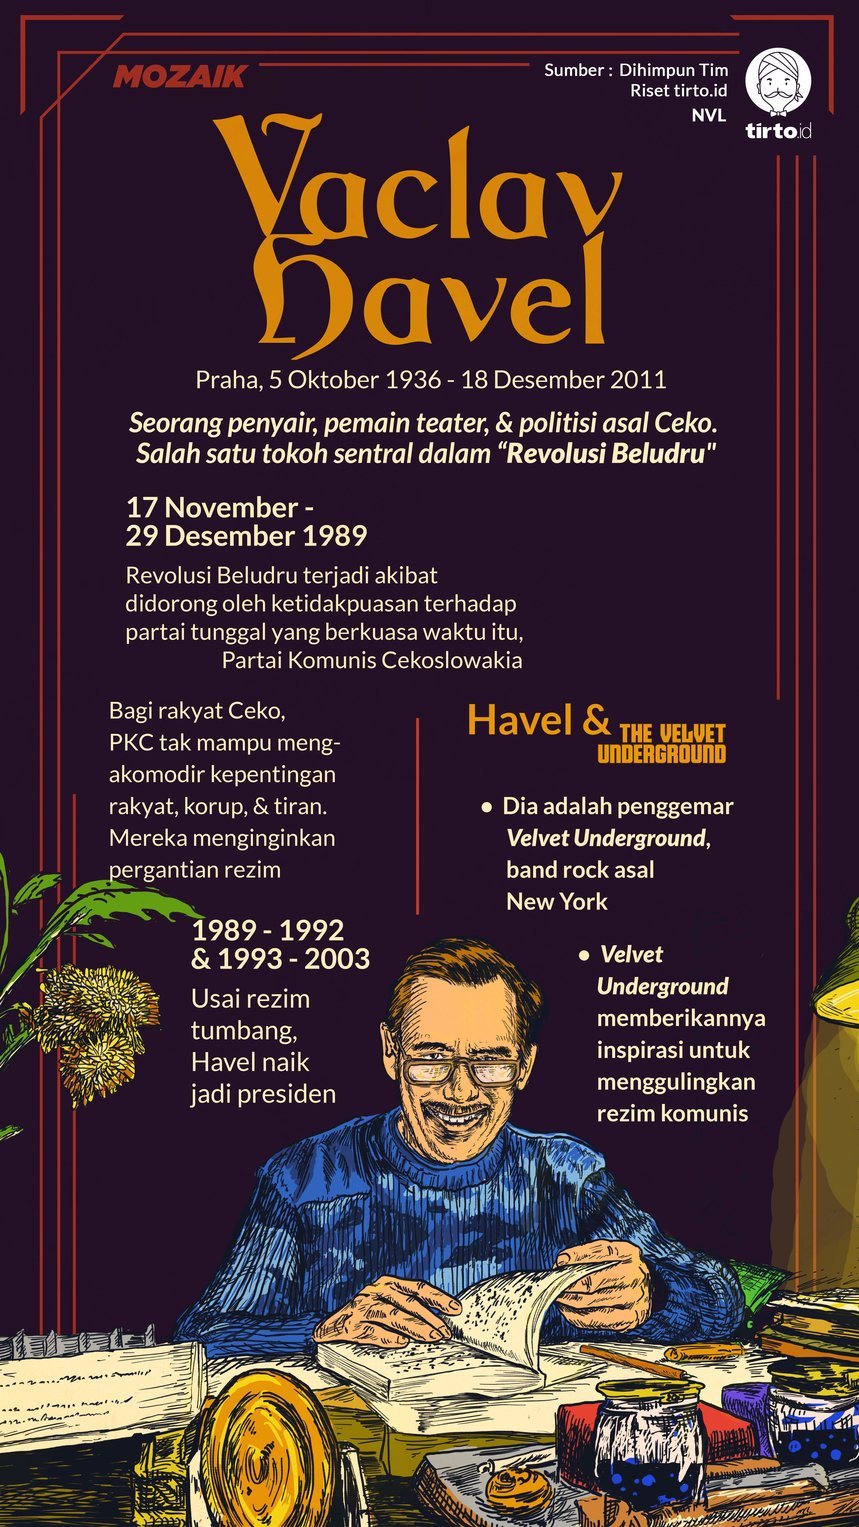 Infografik Mozaik Vaclav Havel